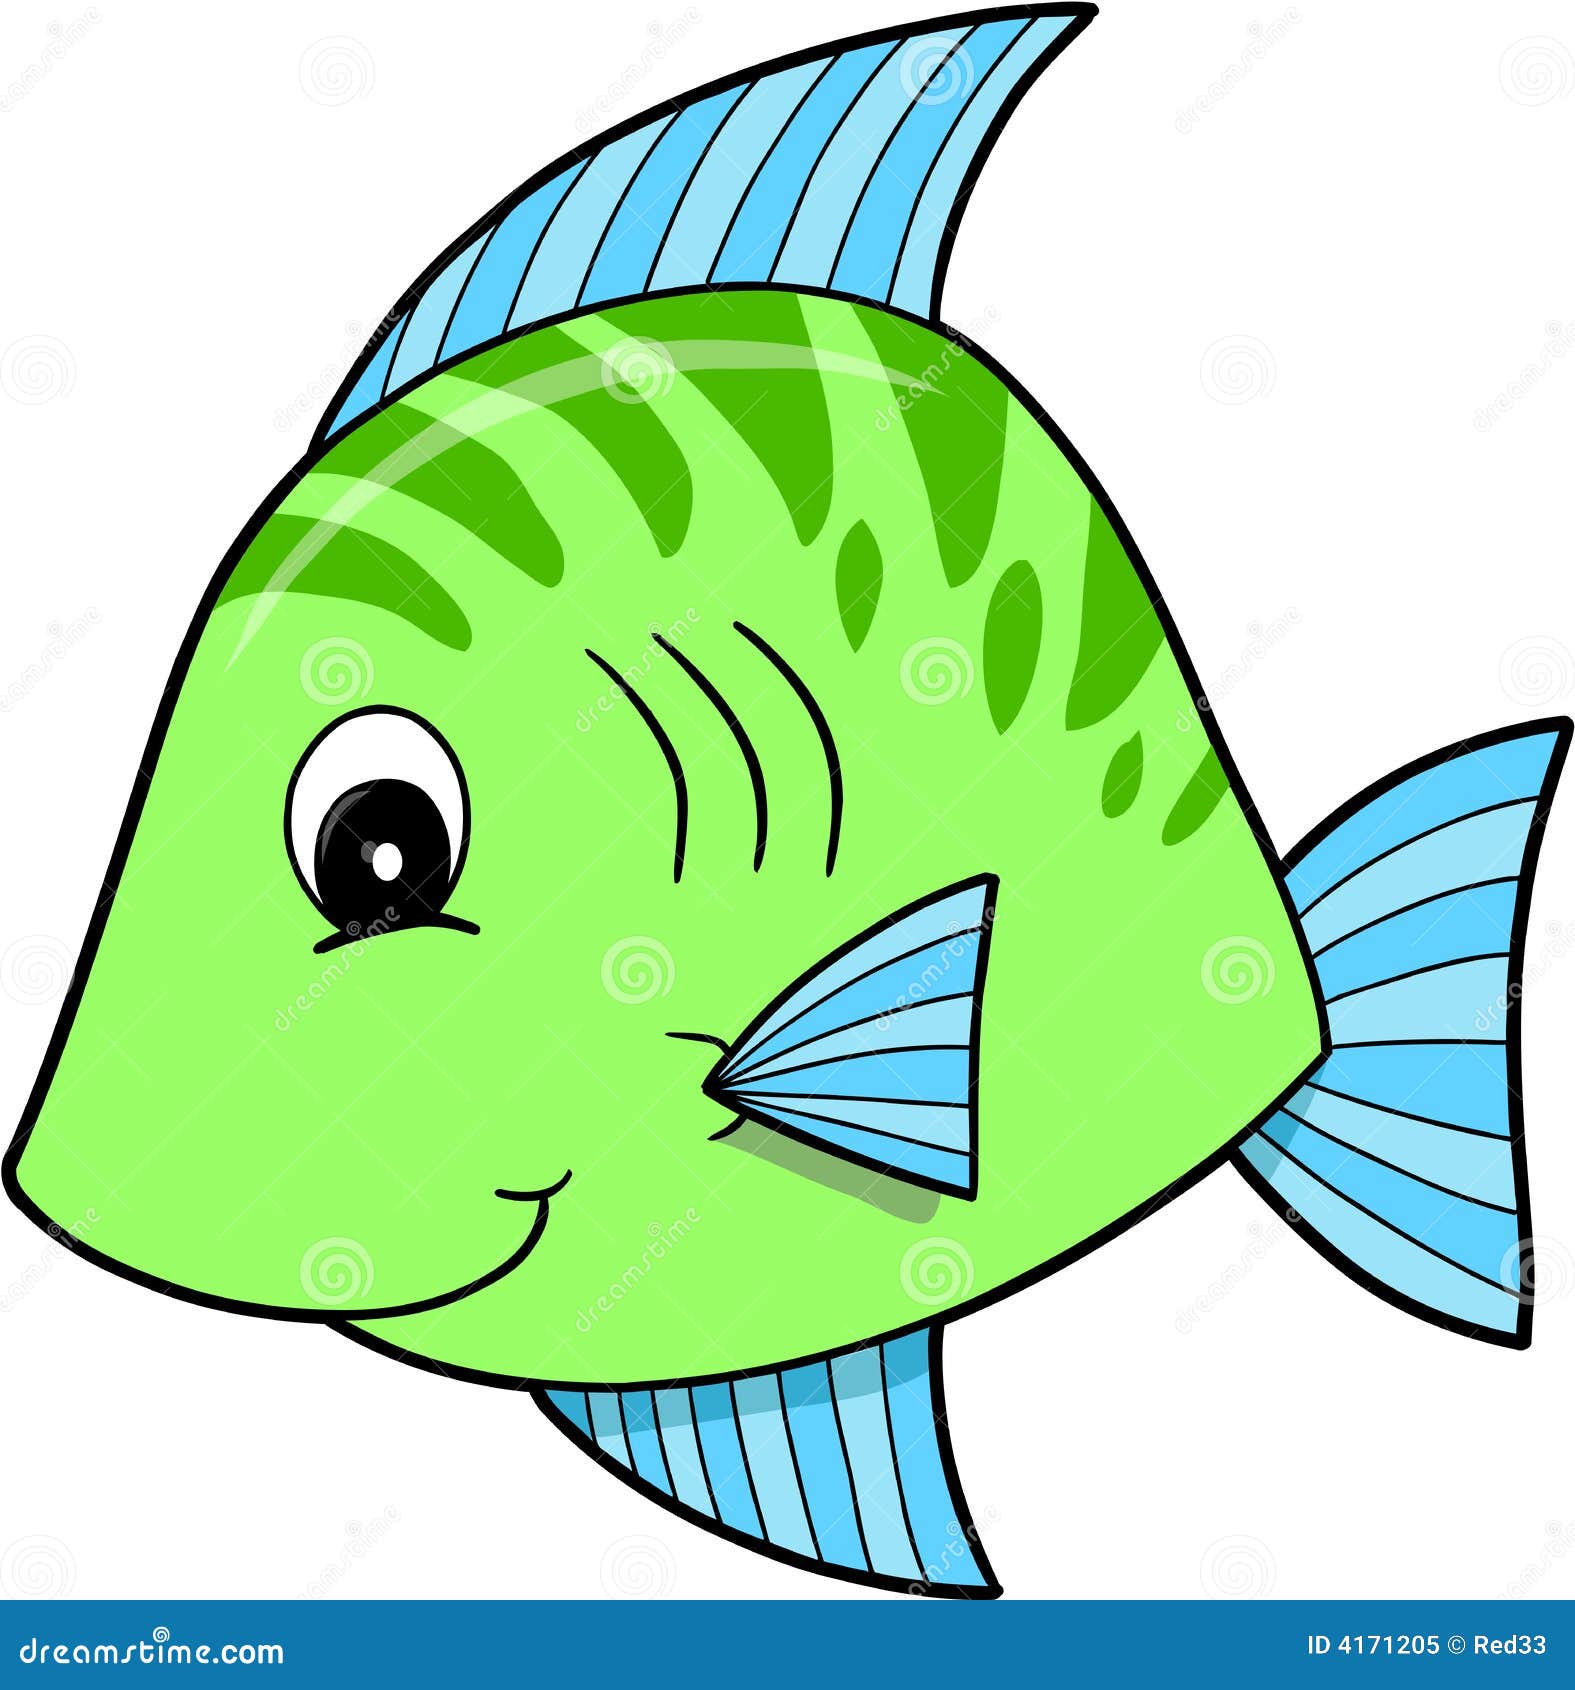 green fish clip art - photo #43